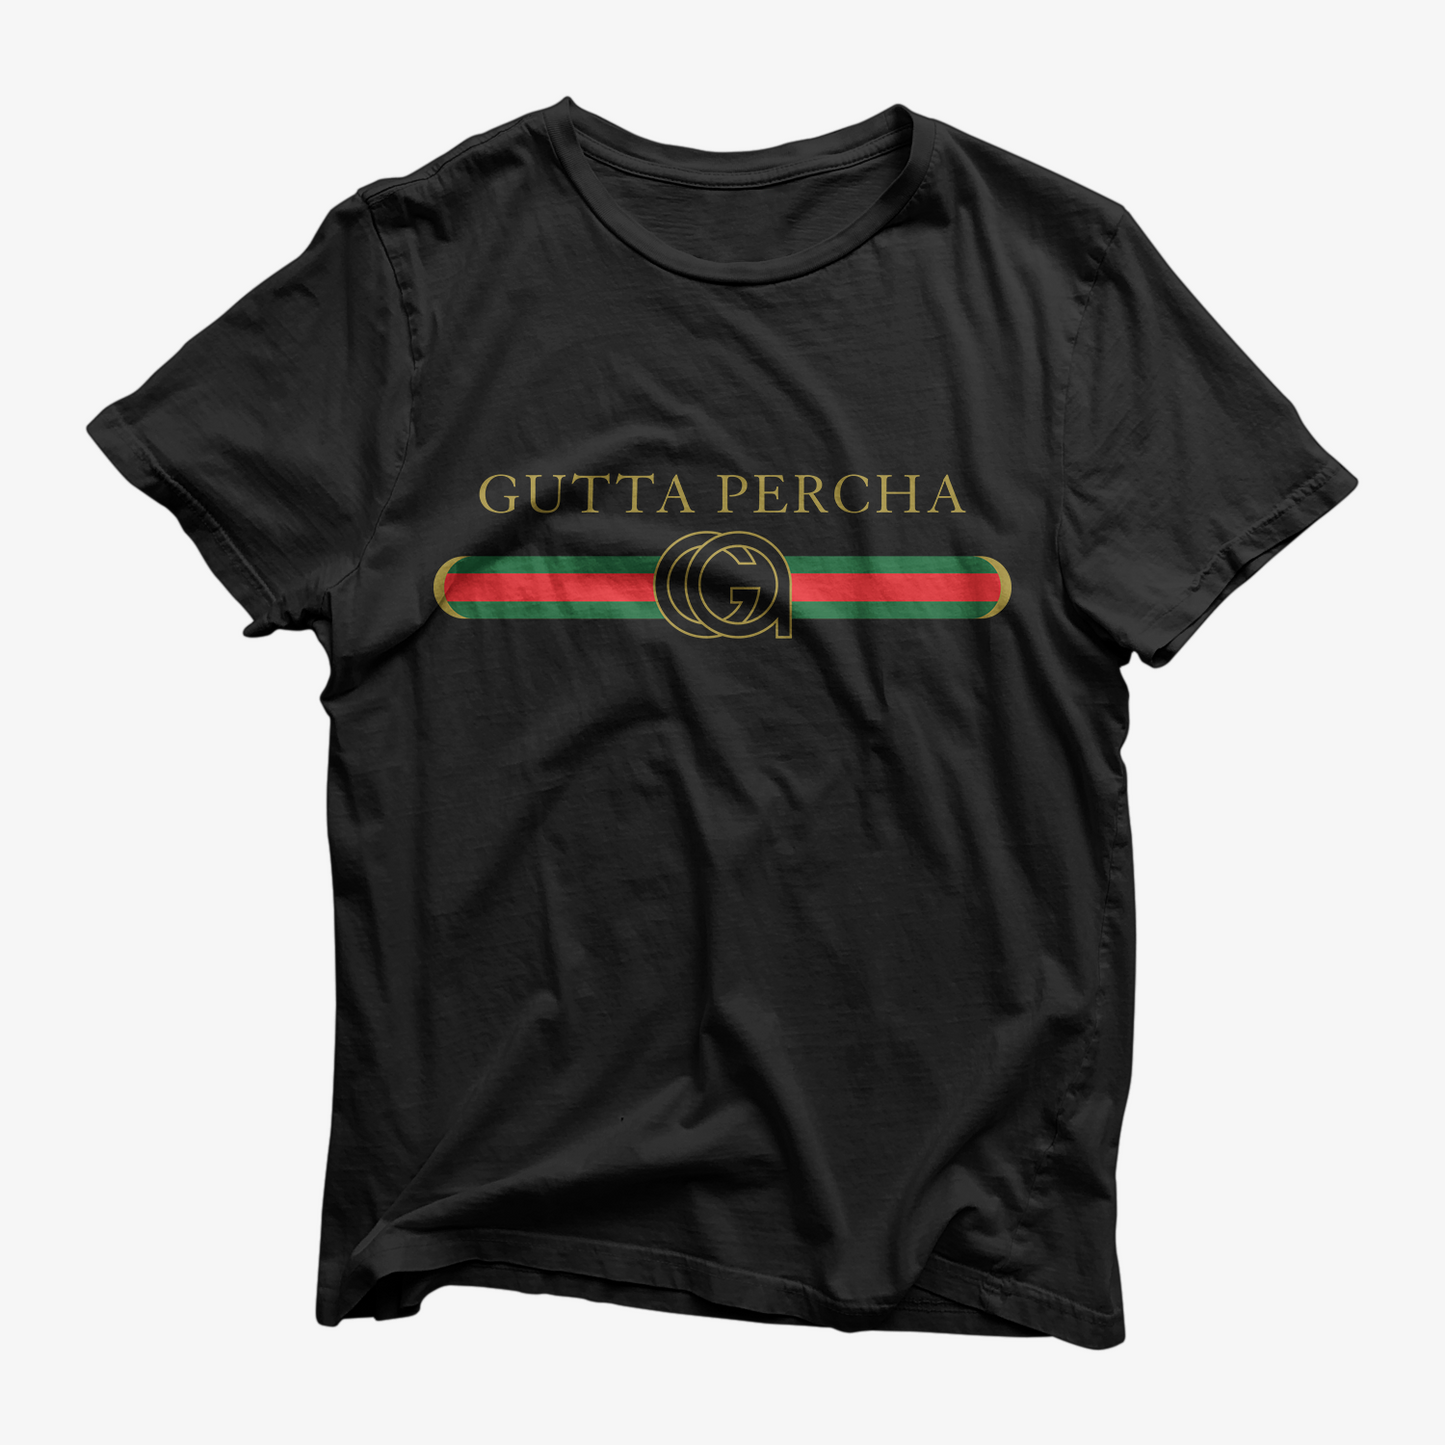 Gutta Percha Shirt